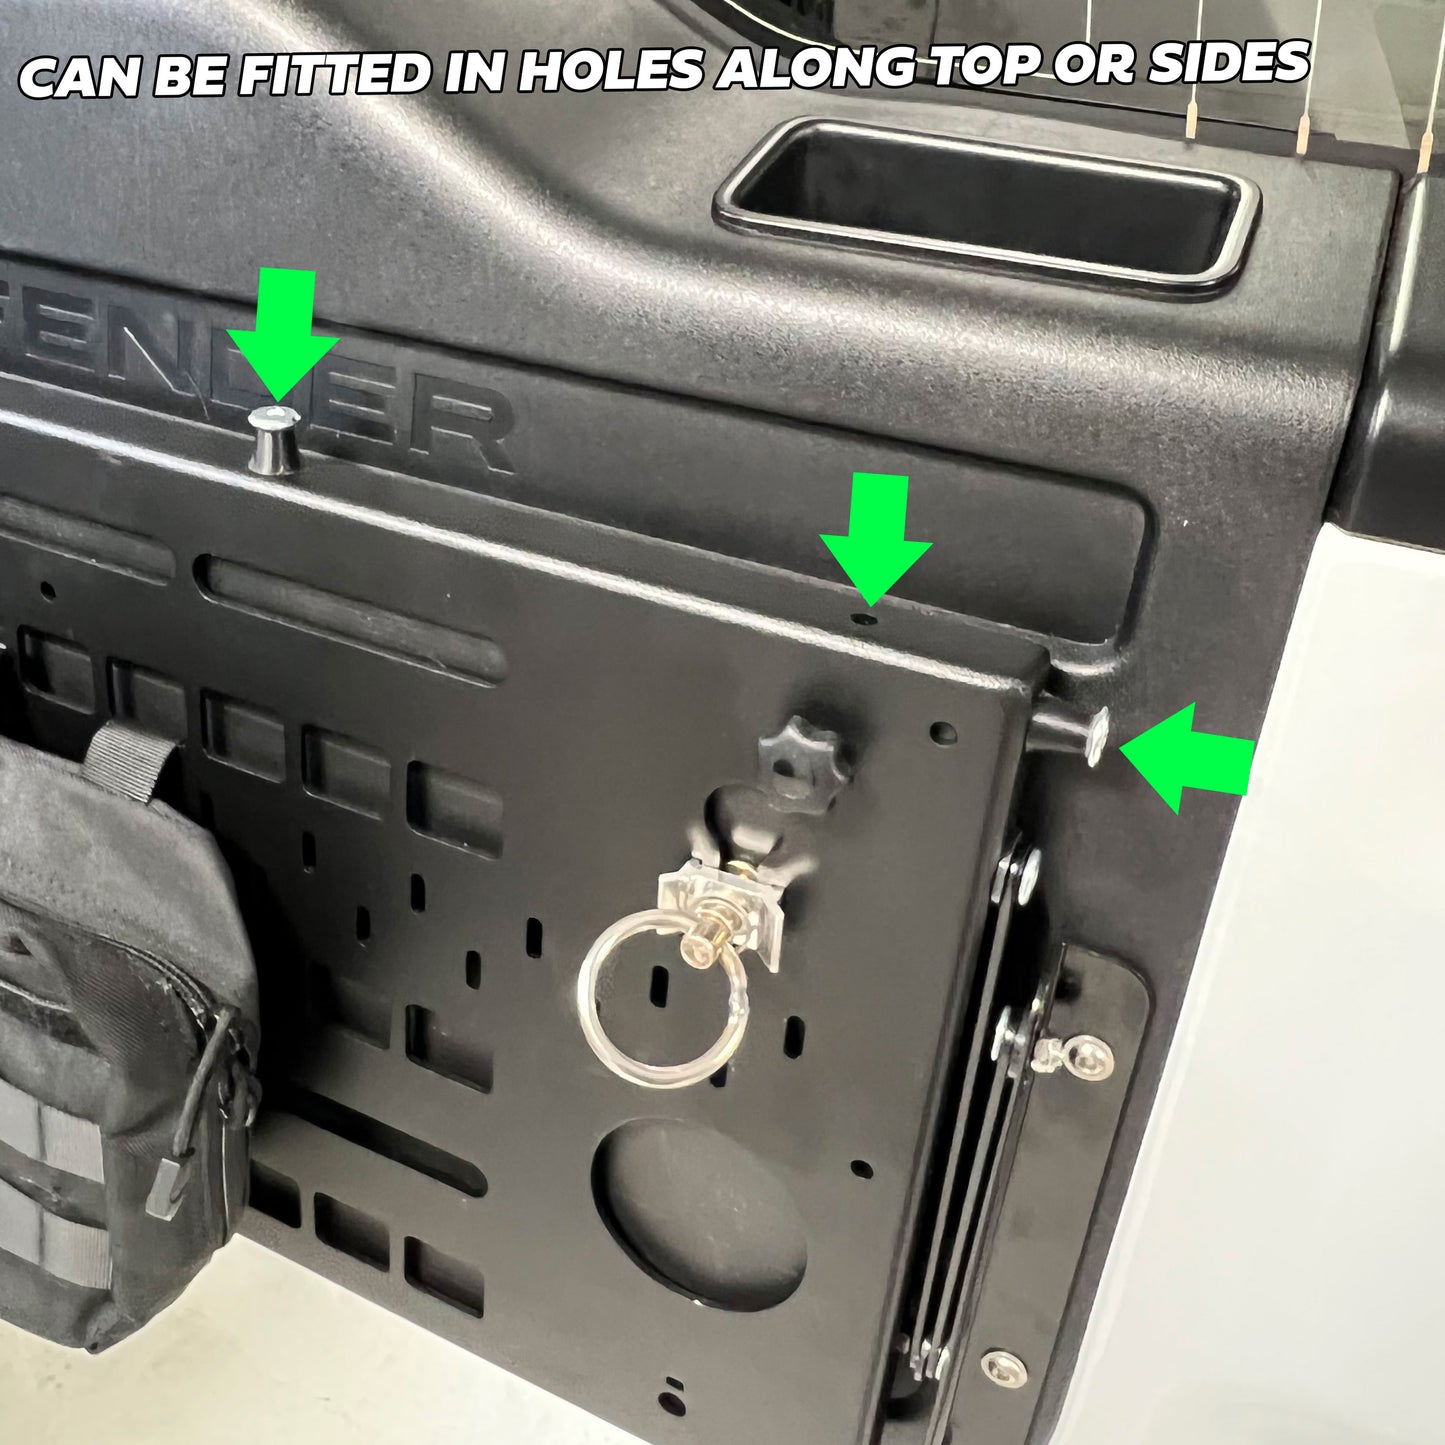 4x Hooks/Hangers for Land Rover Defender Folding Picnic Table